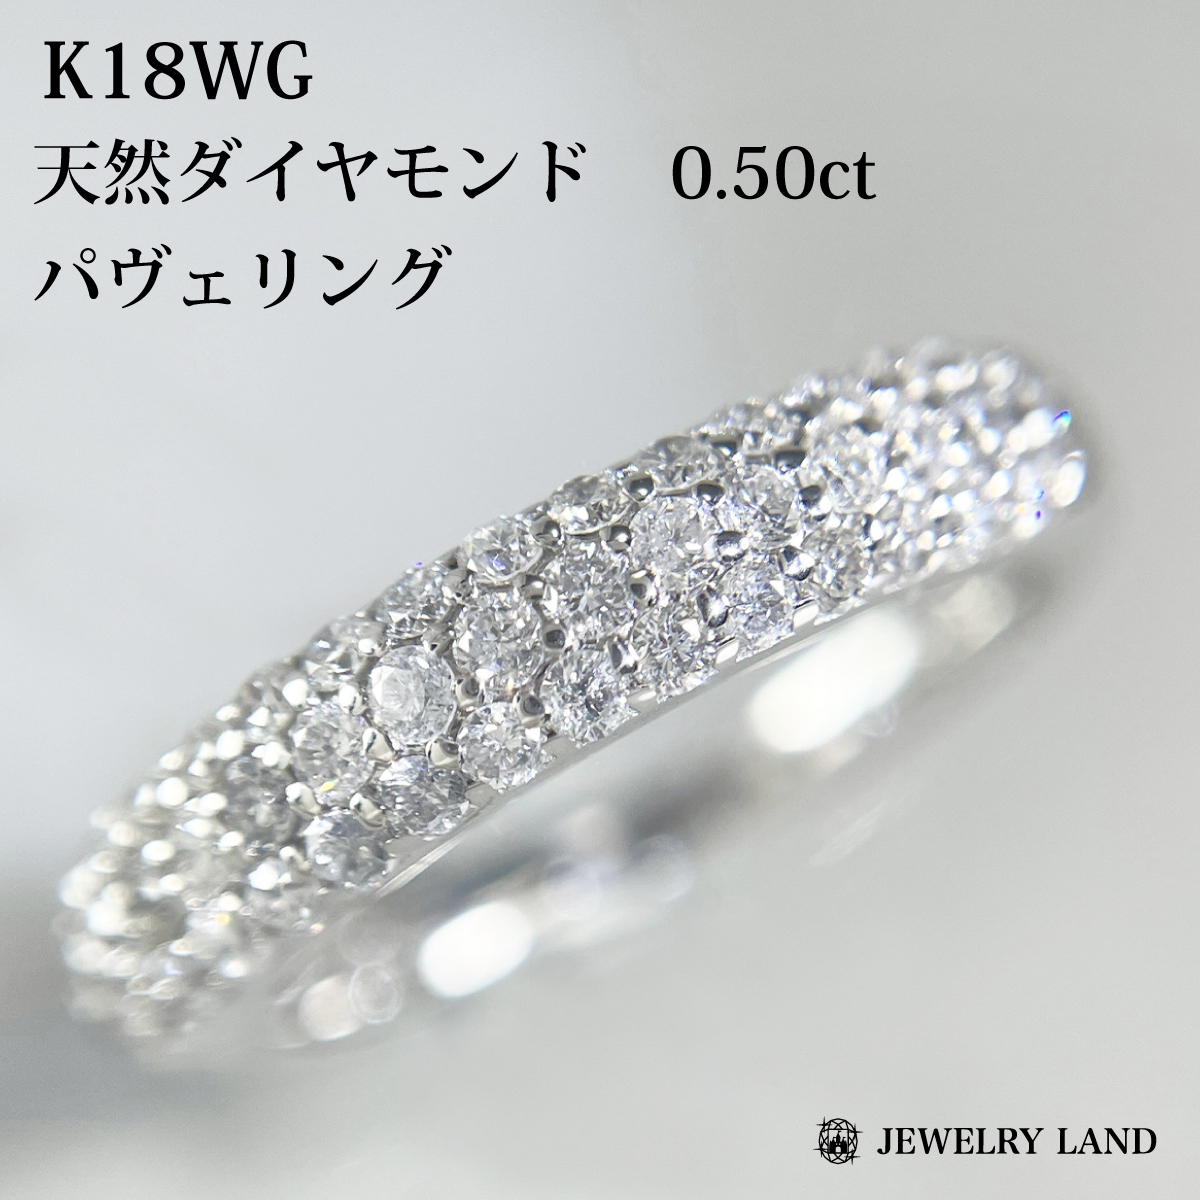 K18wg 天然ダイヤモンド 0.50ct パヴェリング_画像1